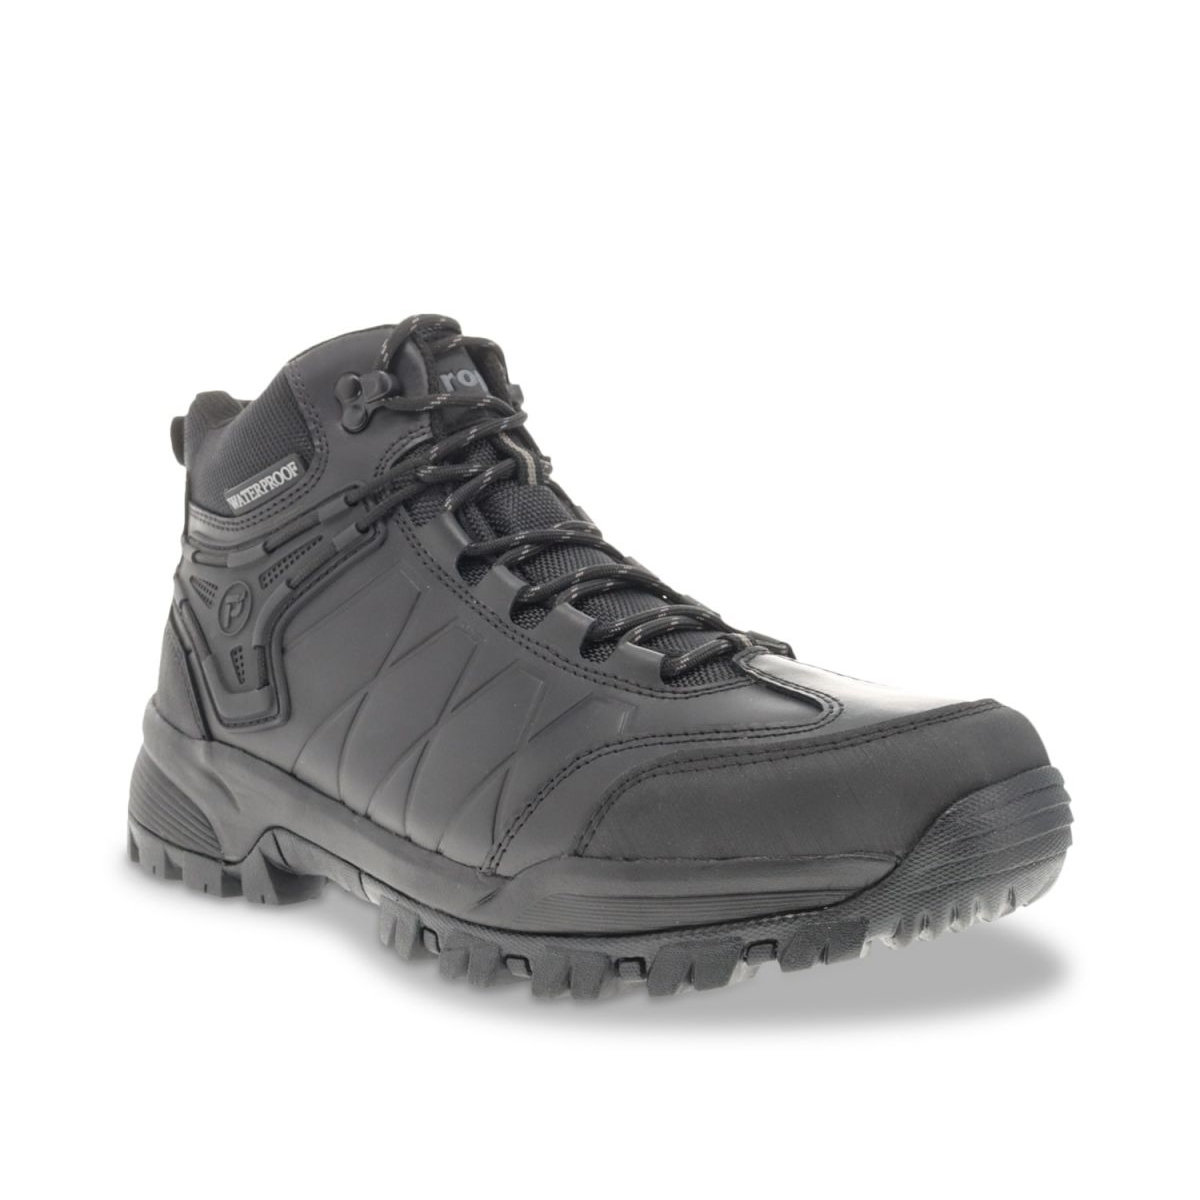 Propet Men's Ridge Walker Force Hiking Boots Black - MBA052LBLK BLACK - BLACK, 11.5 Wide